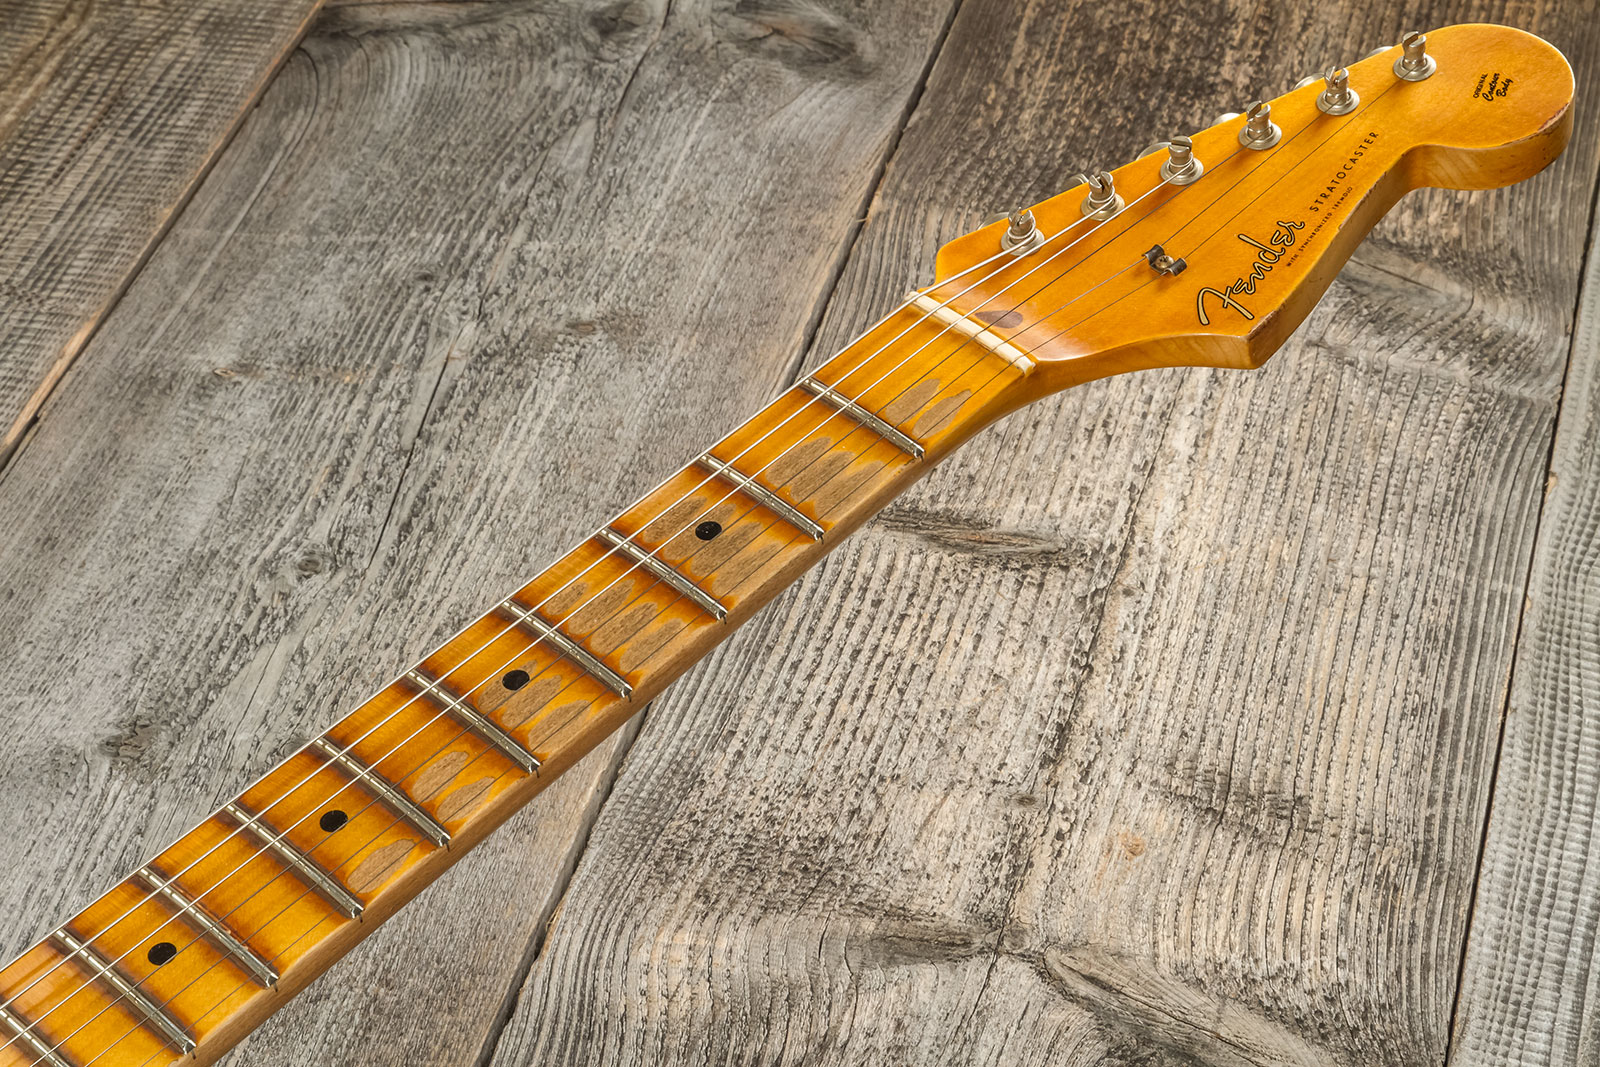 Fender Custom Shop Strat Fat 50's 3s Trem Mn #cz570495 - Relic India Ivory - Str shape electric guitar - Variation 7